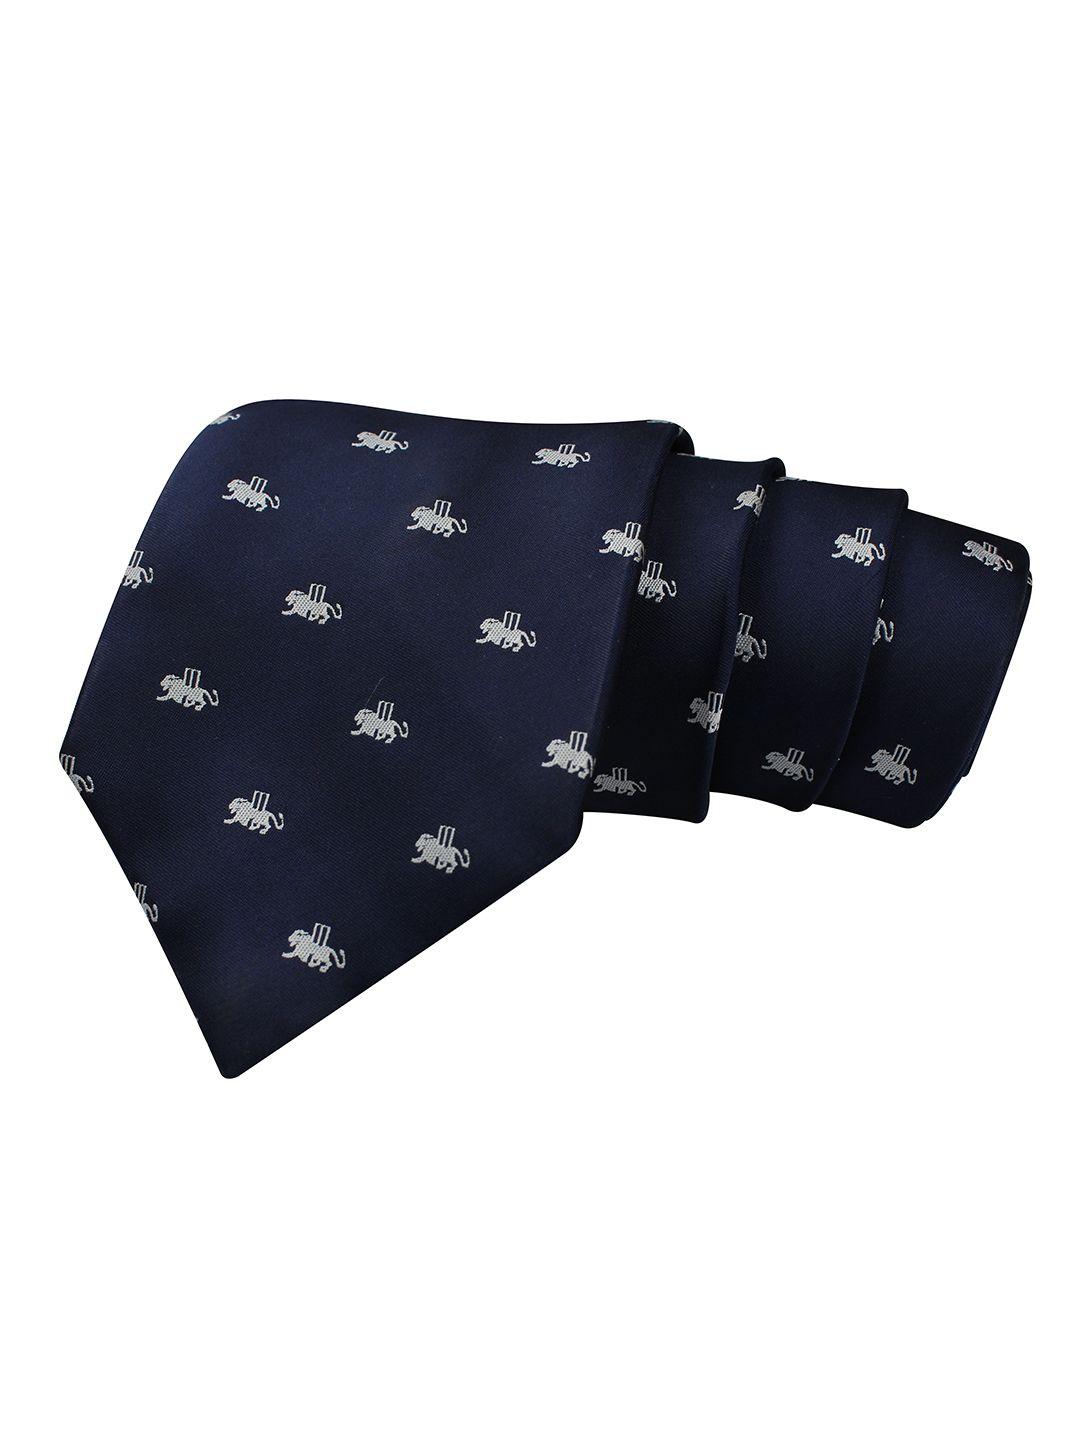 peluche unisex blue woven design broad tie